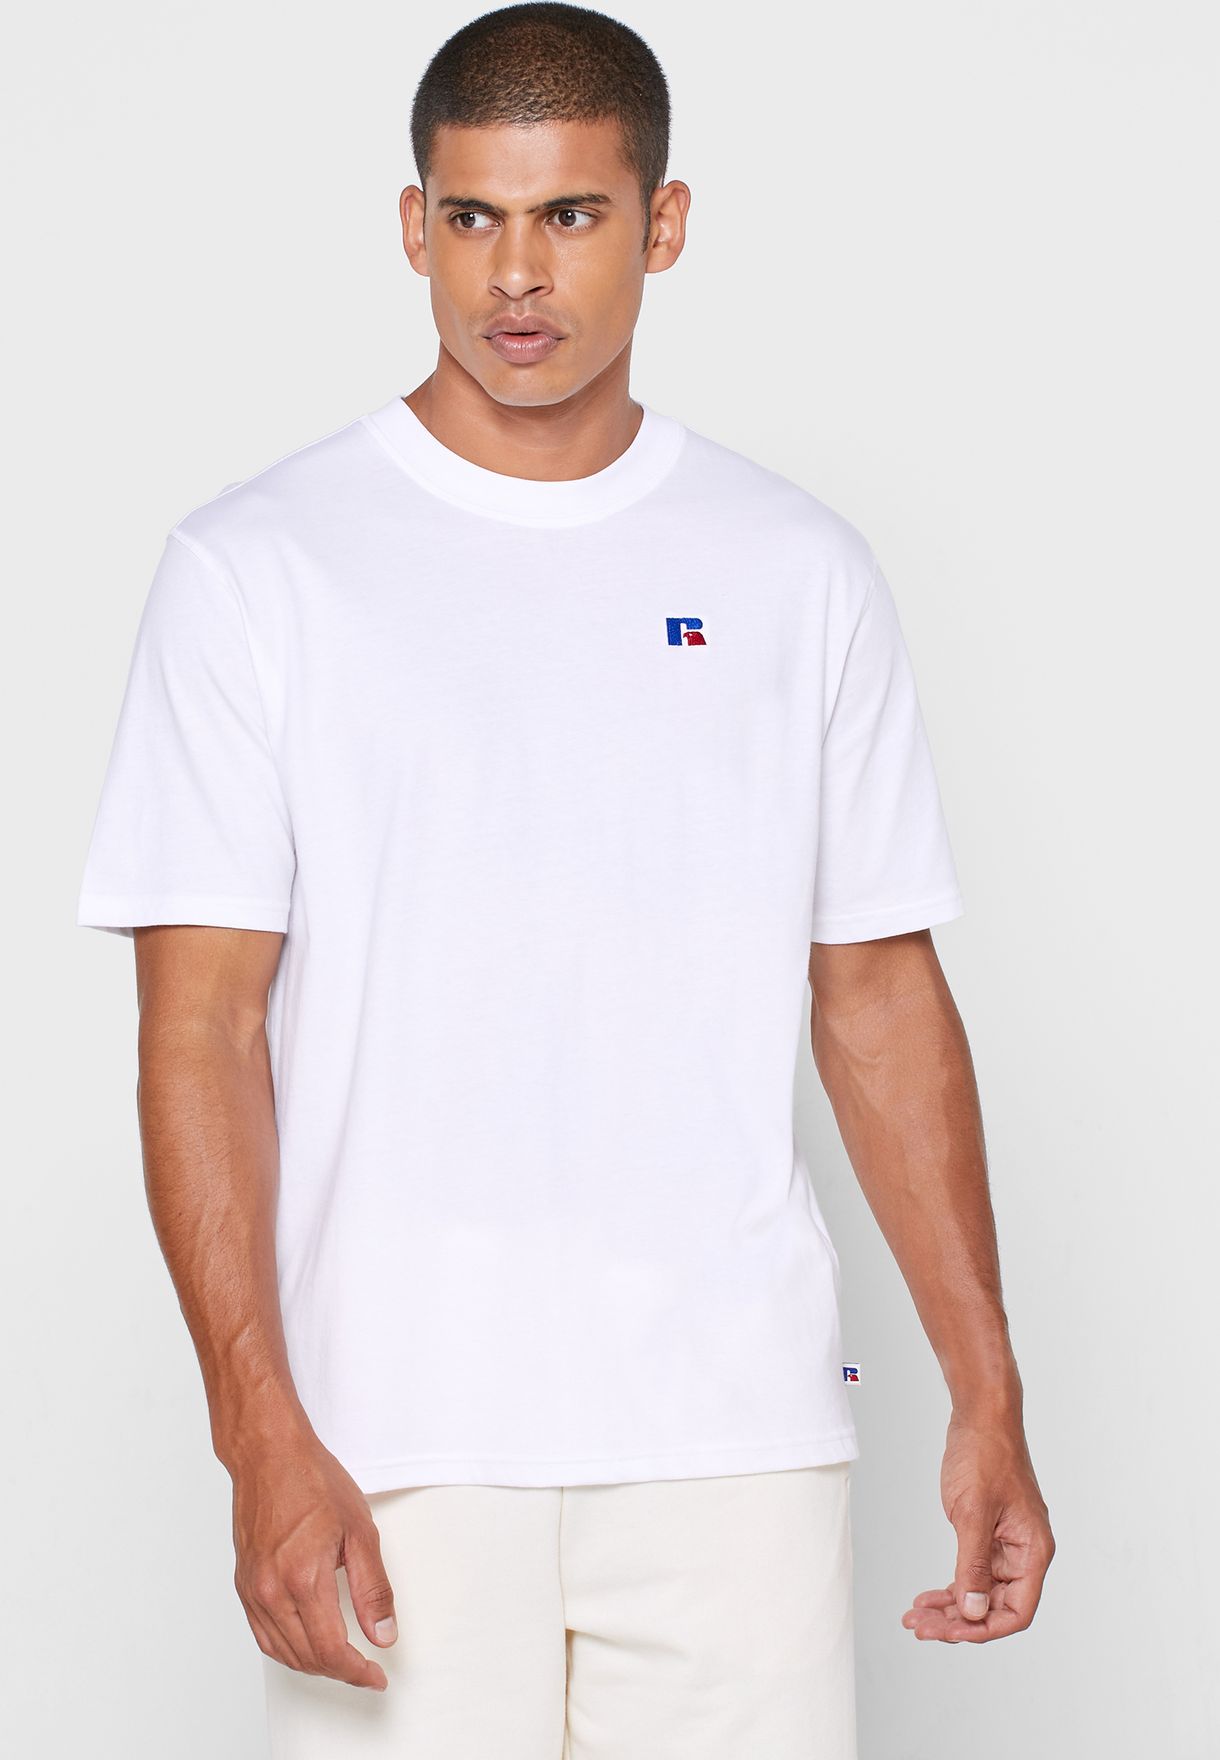 athletic white shirt